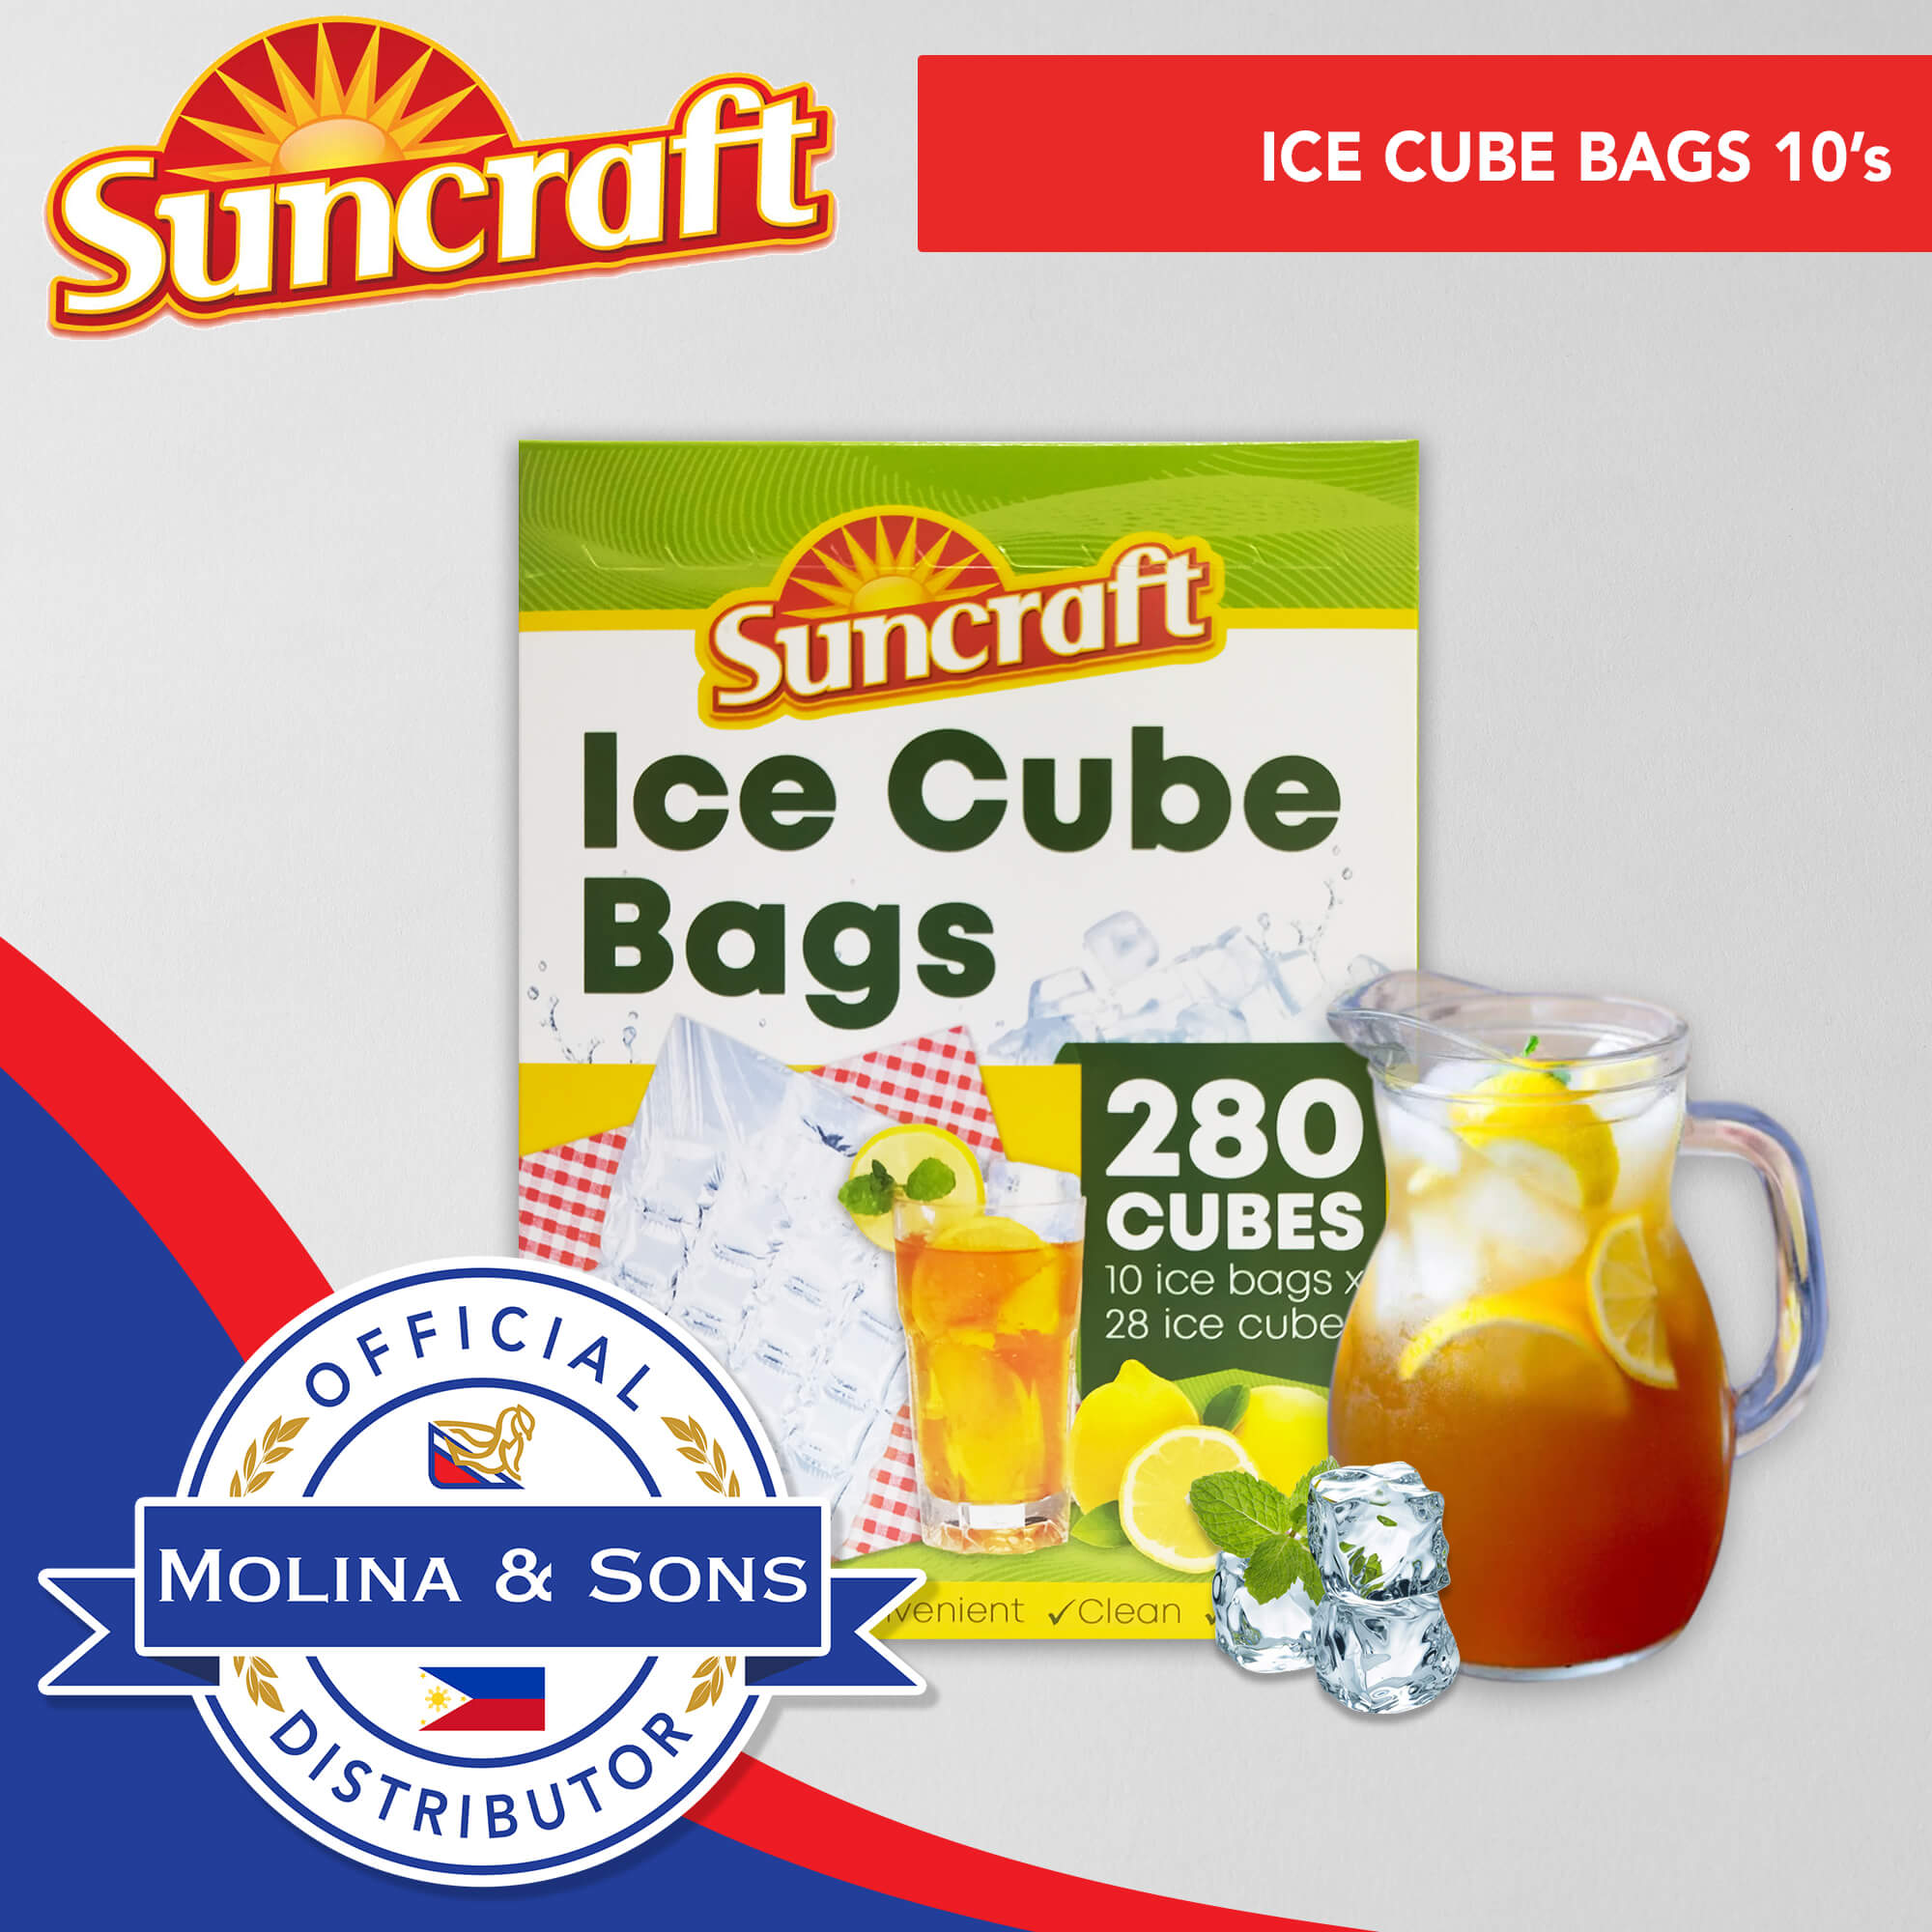 Disposable Ice-making Bag Frozen Ice Cube 10 Bags x 28 ice cubes par bag = 280 